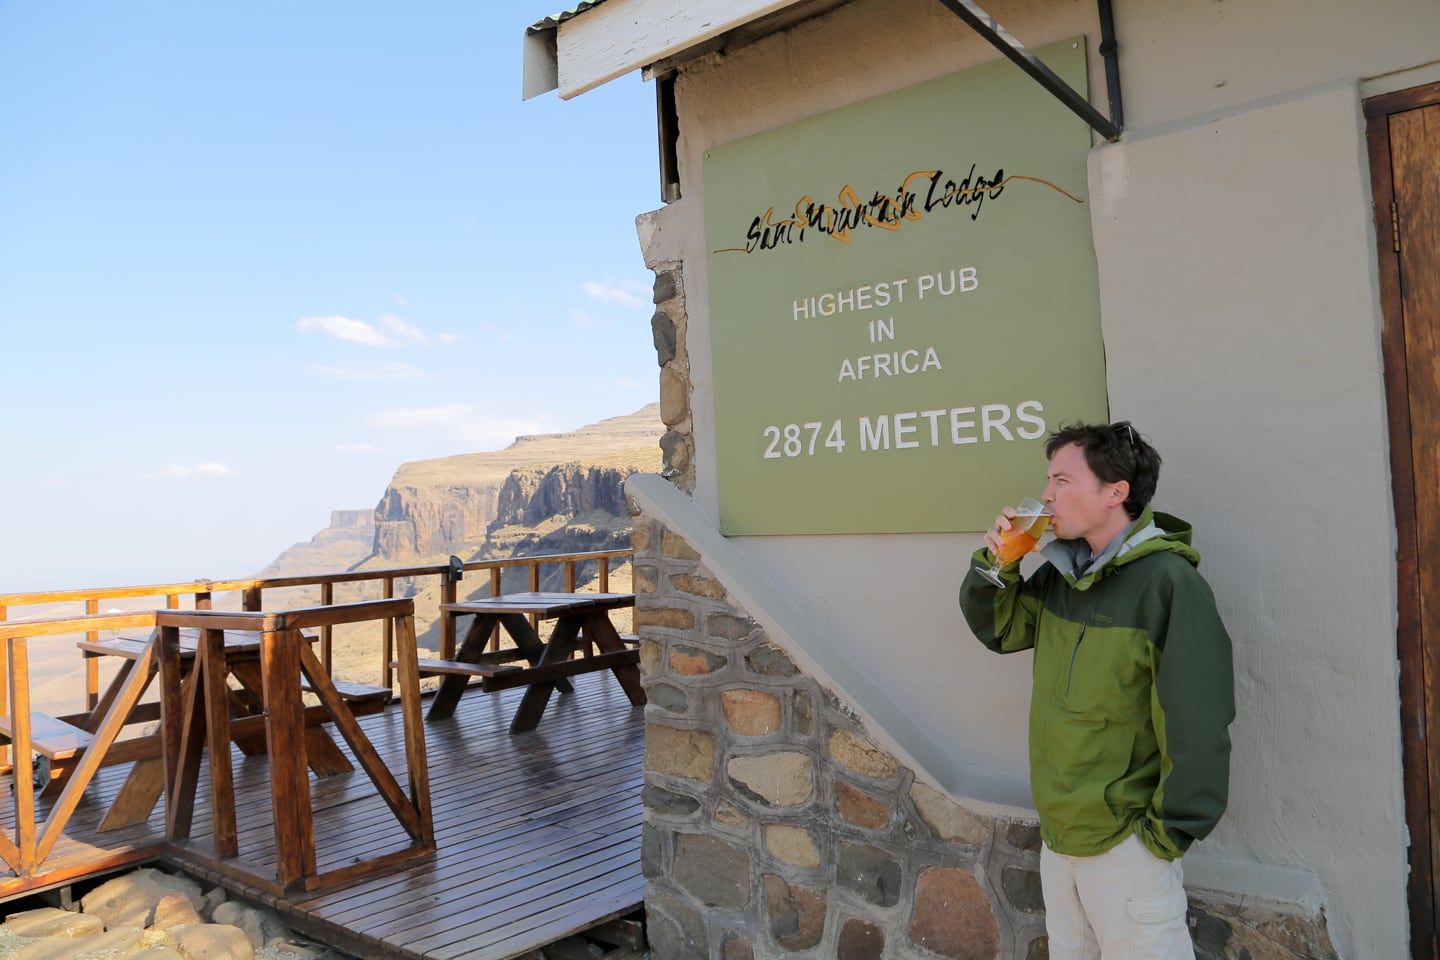 Sani Mountain Lodge highest pub in Africa